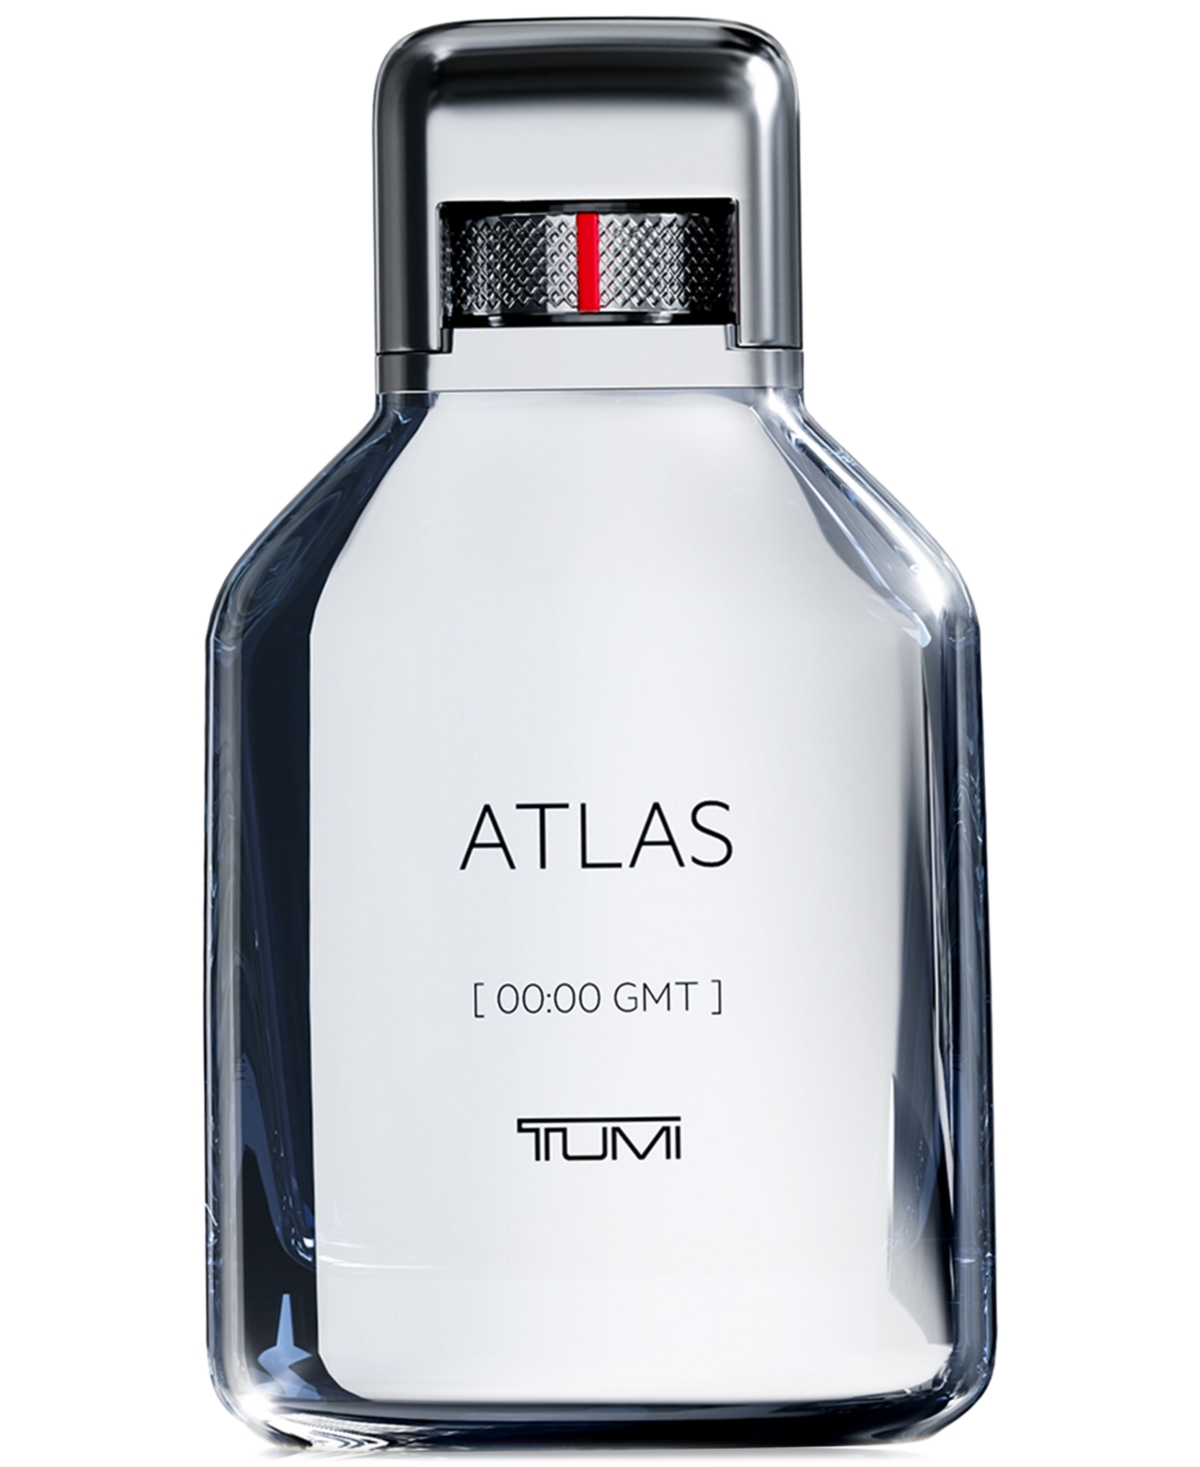 Atlas [00:00 Gmt] Tumi Eau de Parfum Spray, 3.4 oz.